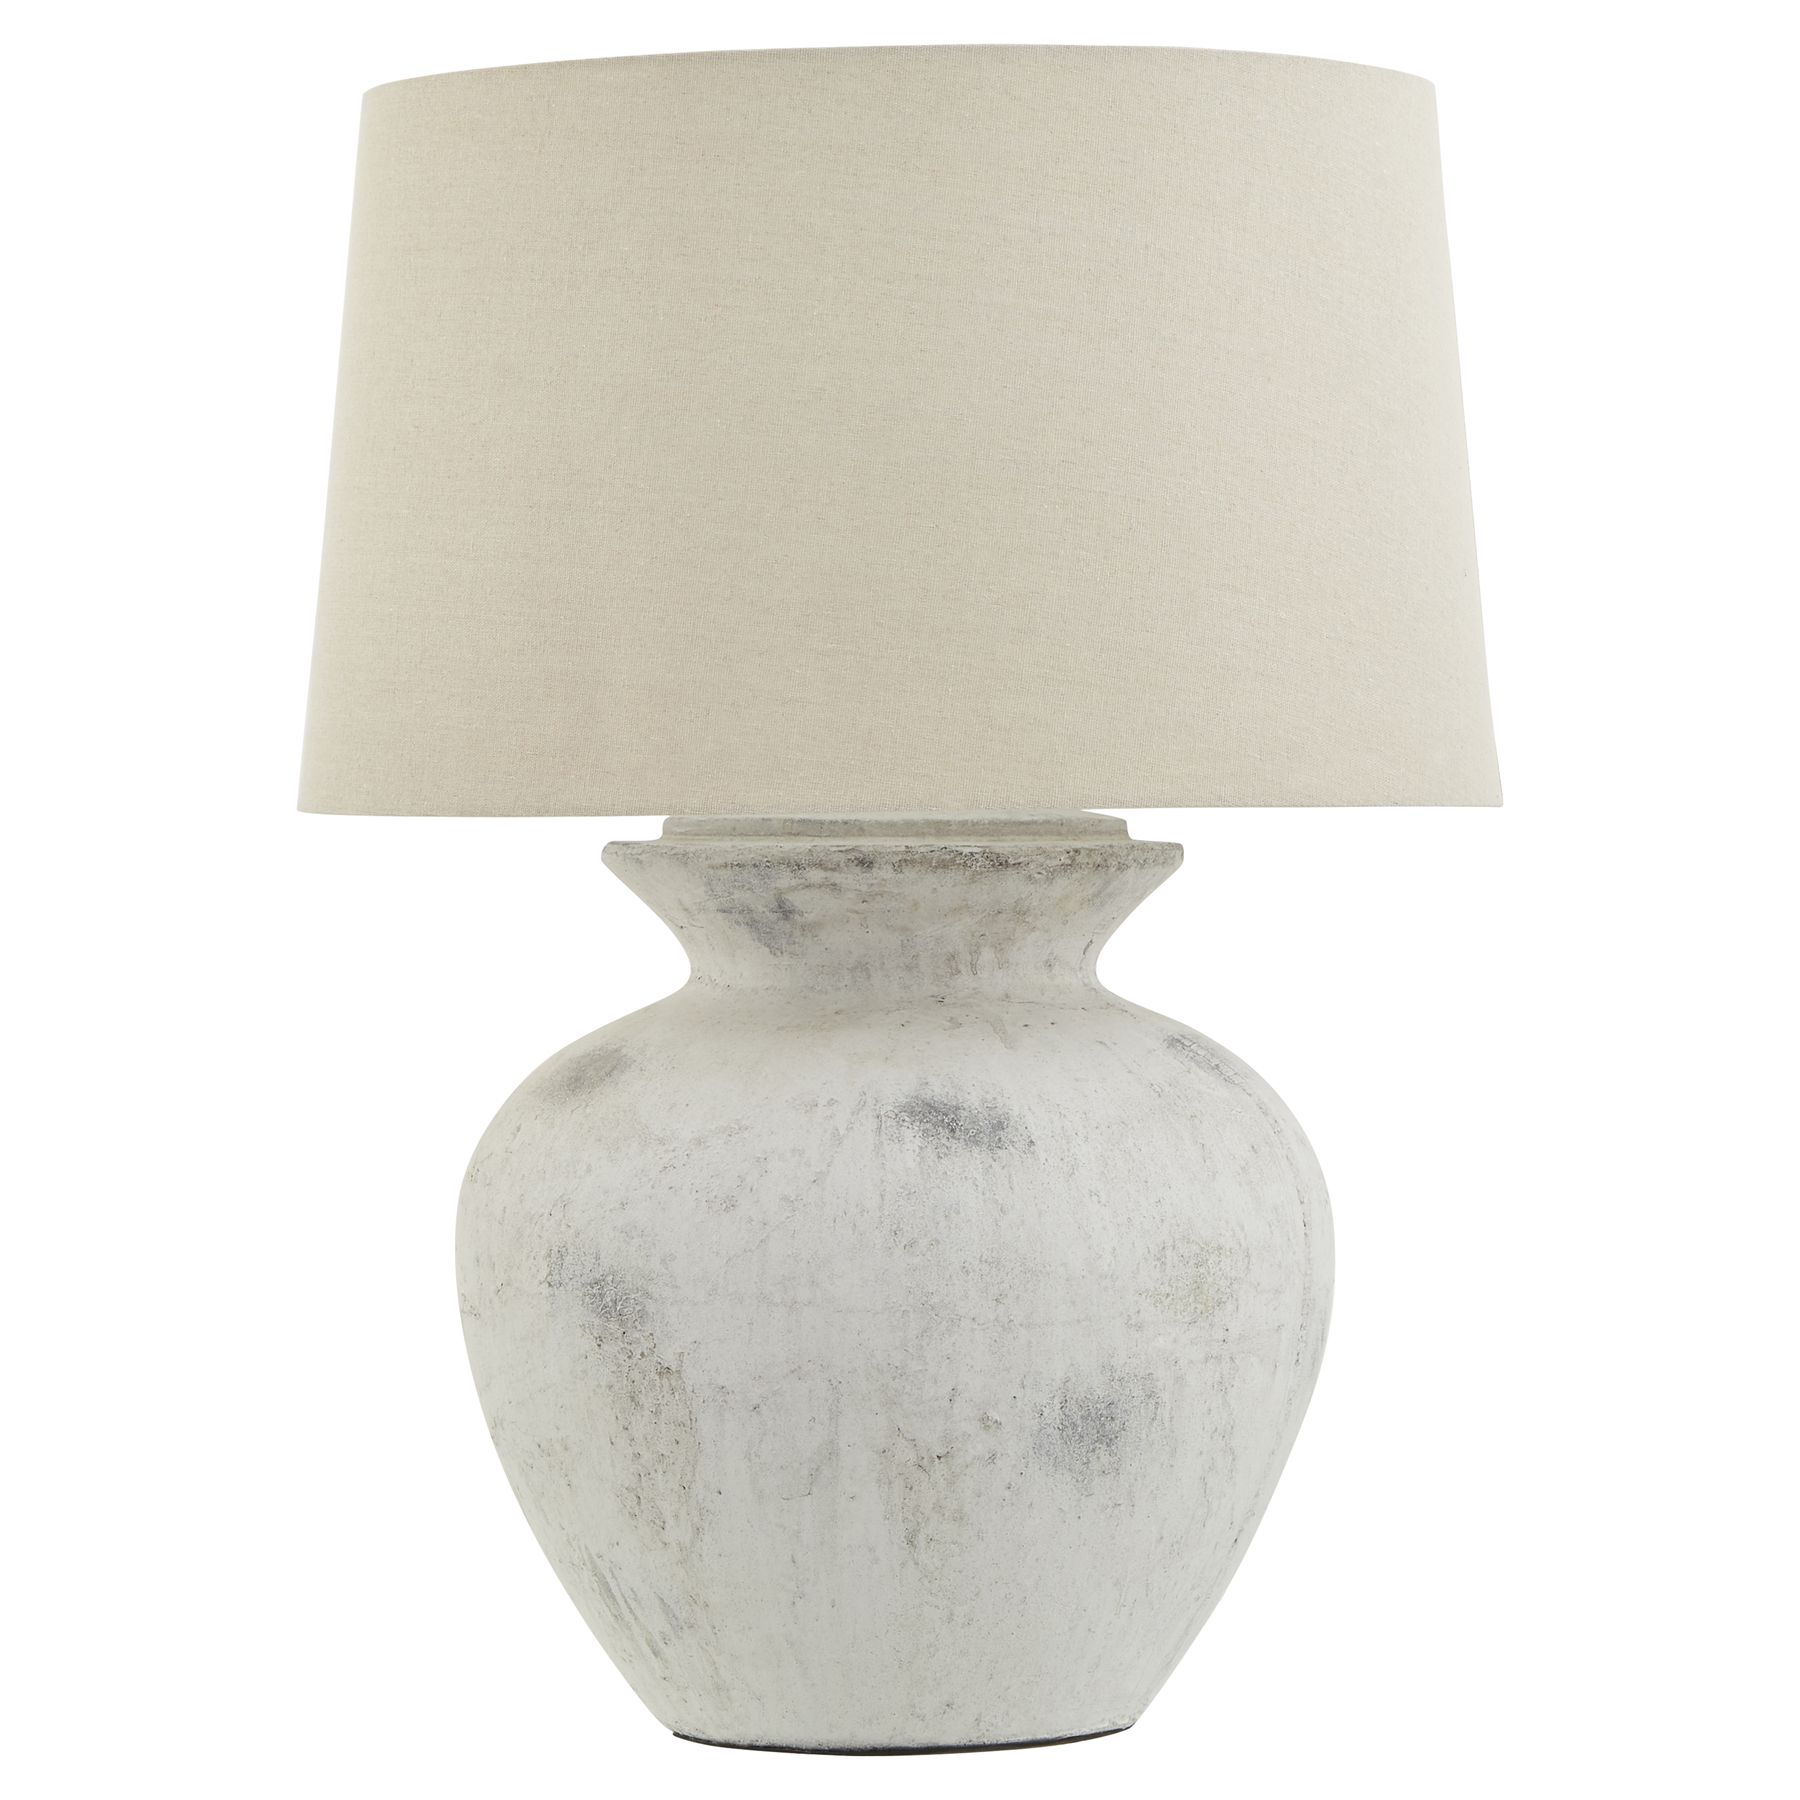 Downton Antique White Lamp - Image 1